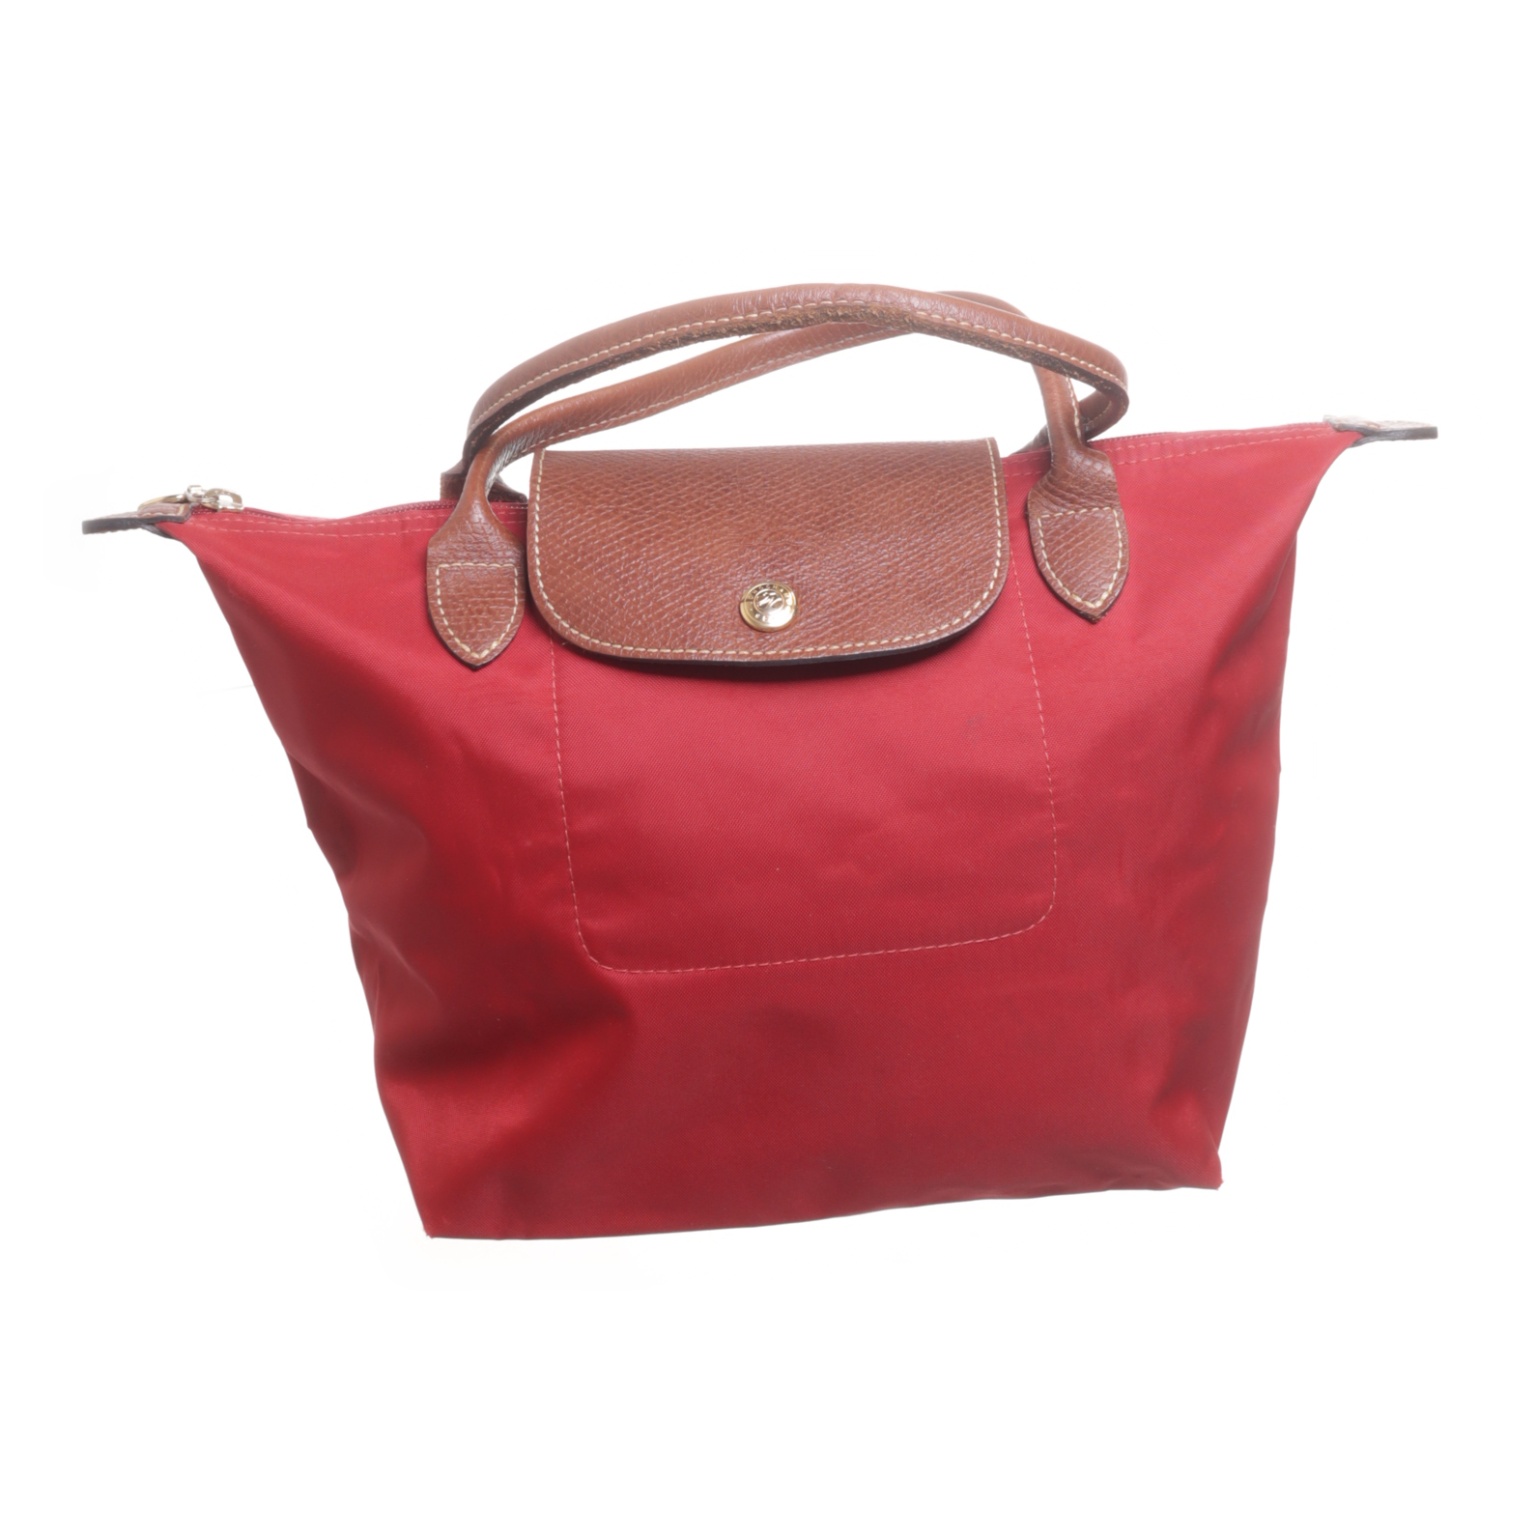 Longchamp - Handtasche - Rot von Longchamp